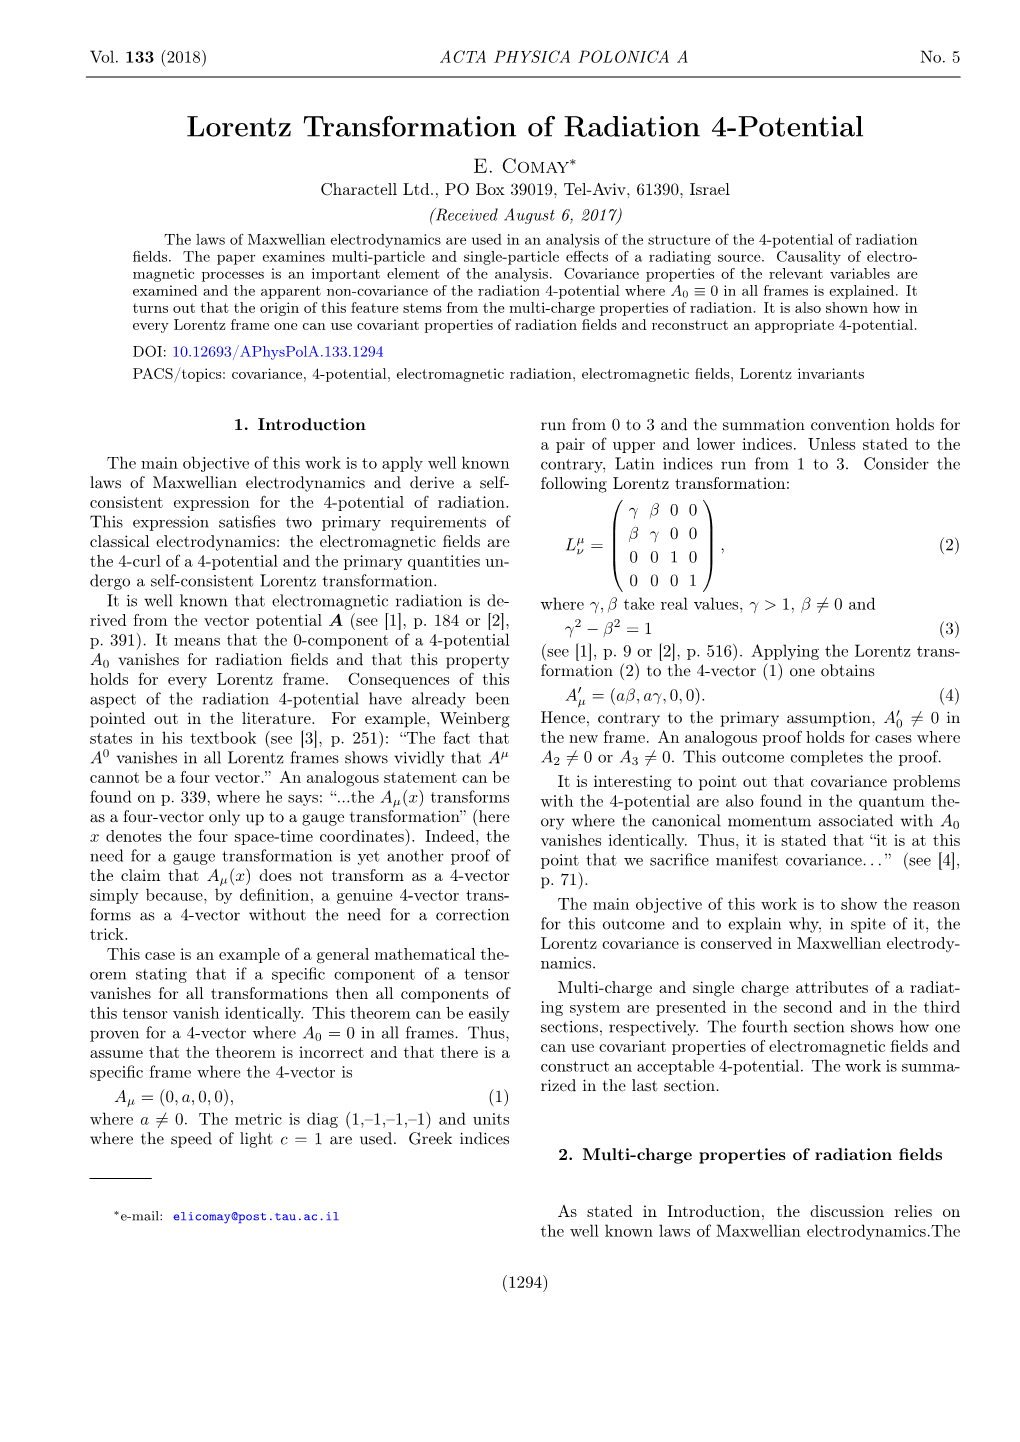 Lorentz Transformation of Radiation 4-Potential E